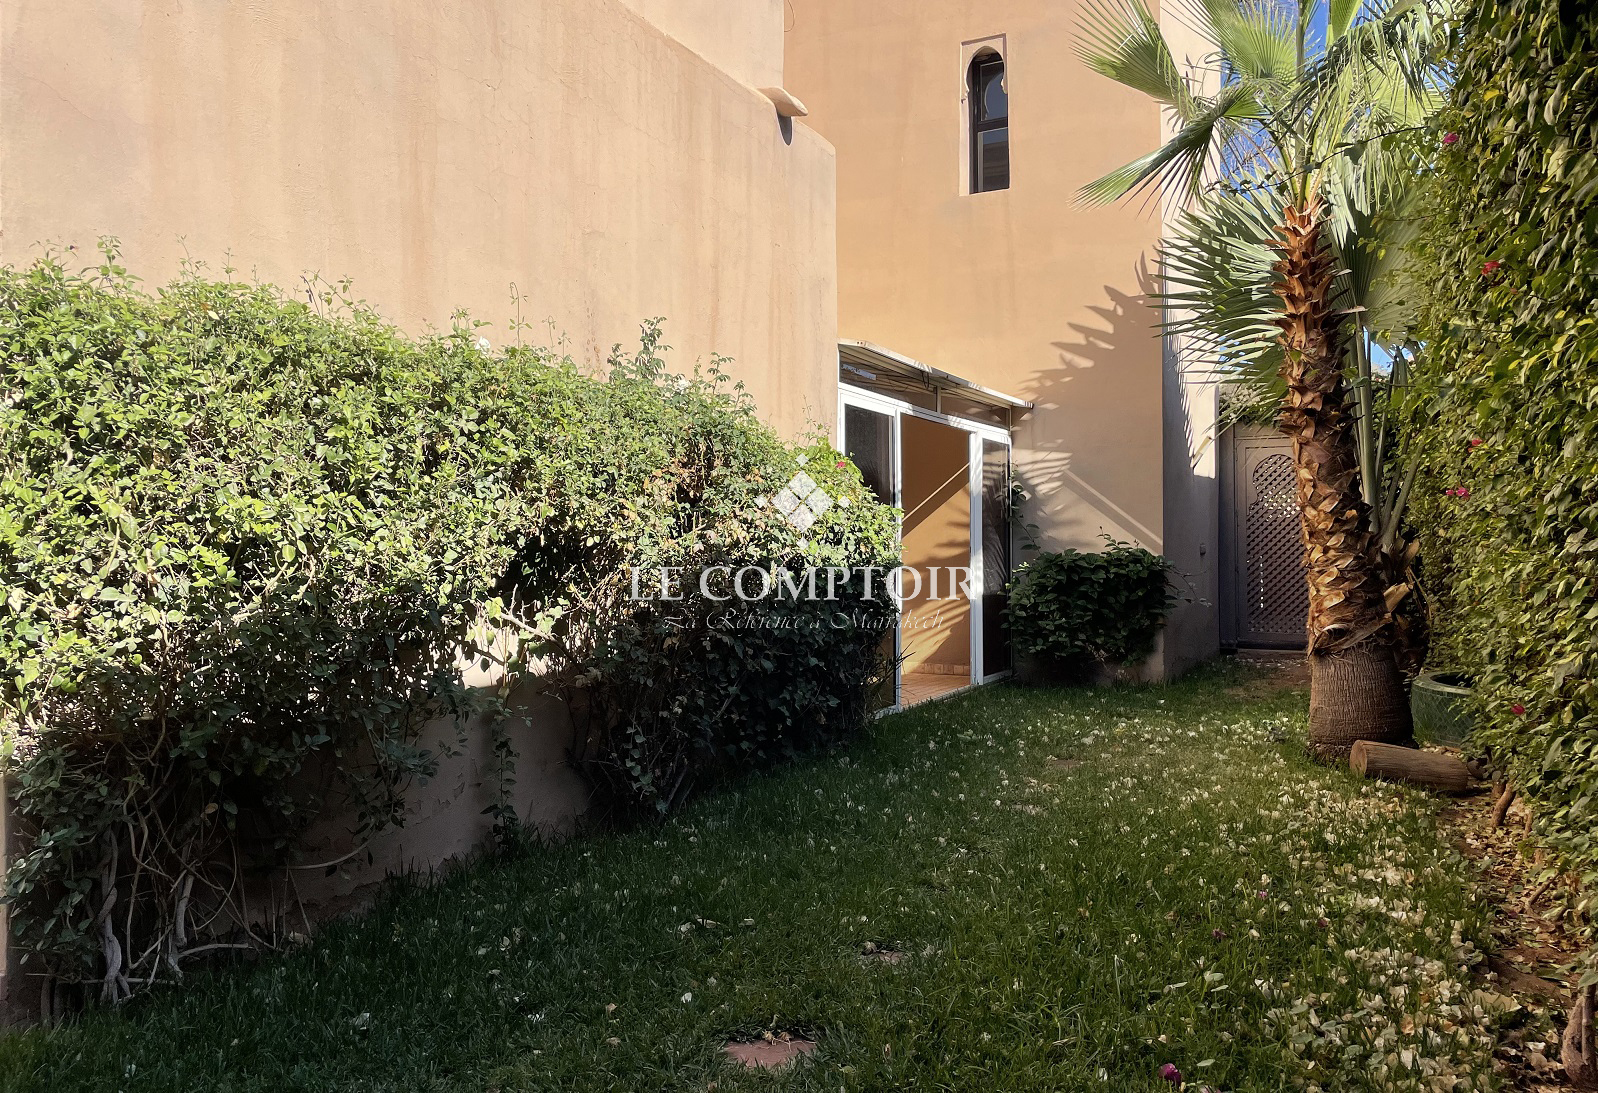 Le Comptoir Immobilier Agence Immobiliere Marrakech Villa Residence Non Meublee Location Marakech Maroc Piscine 2 2